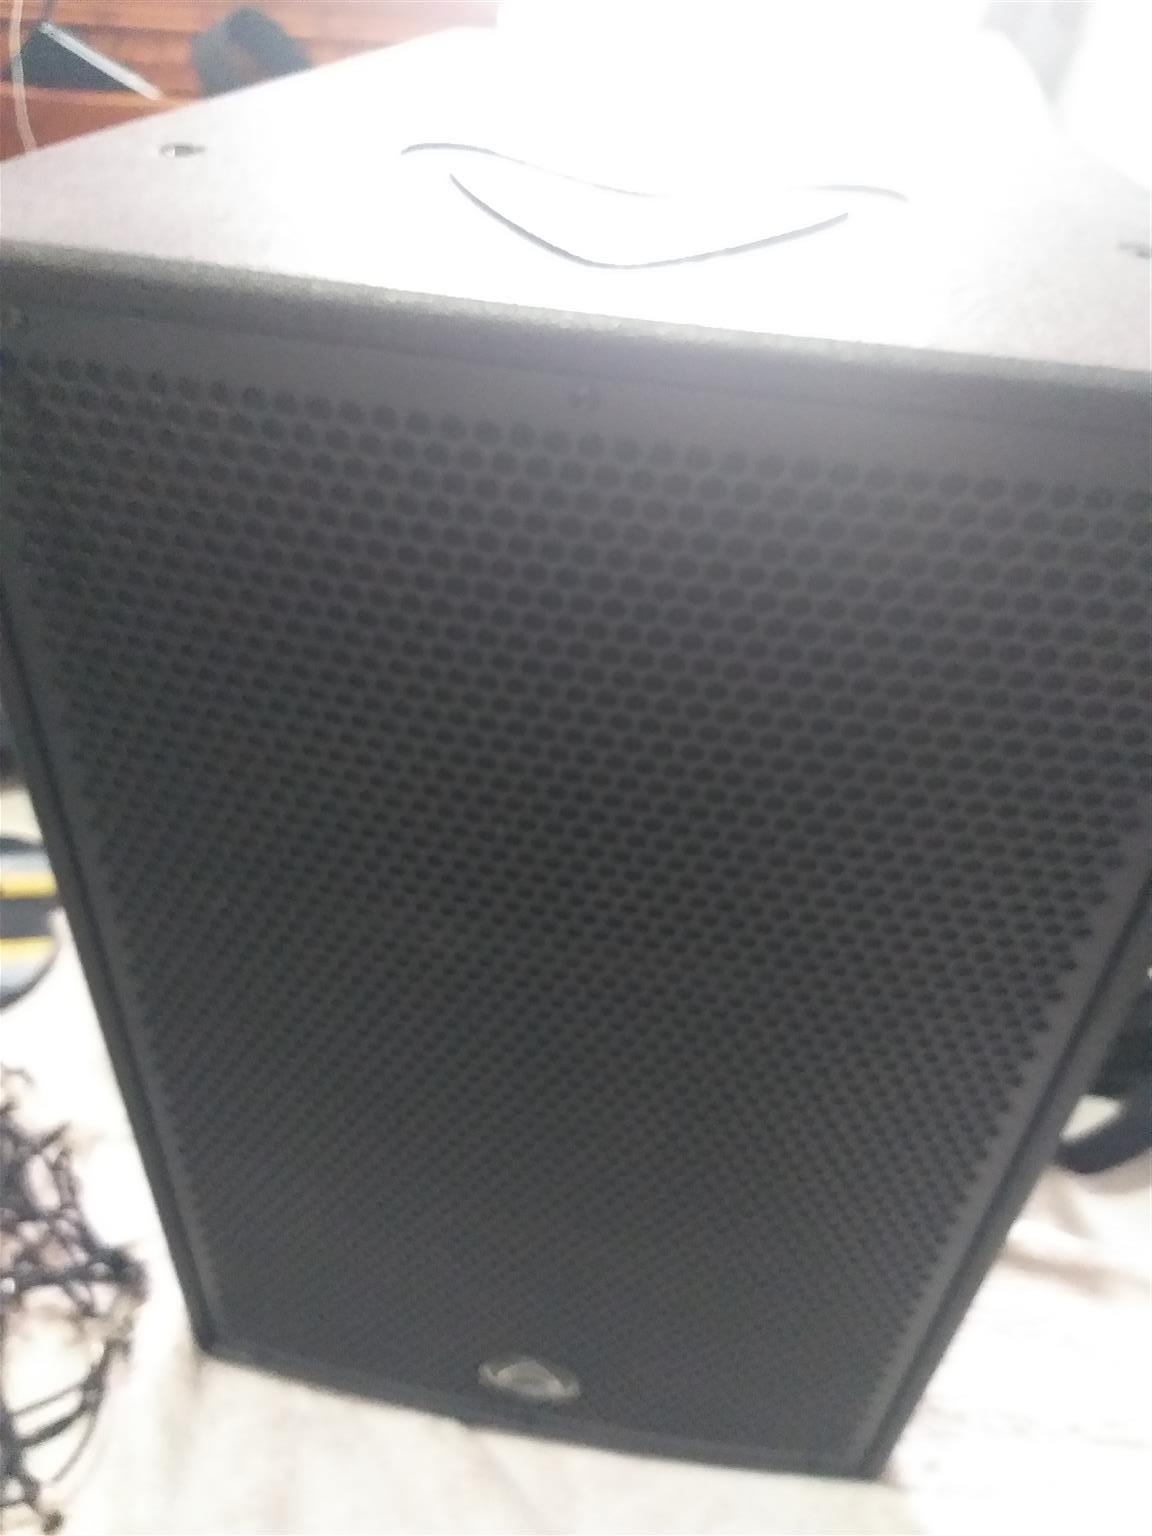 Delta×15 single speaker for sale. Asking price R5500. Not used.